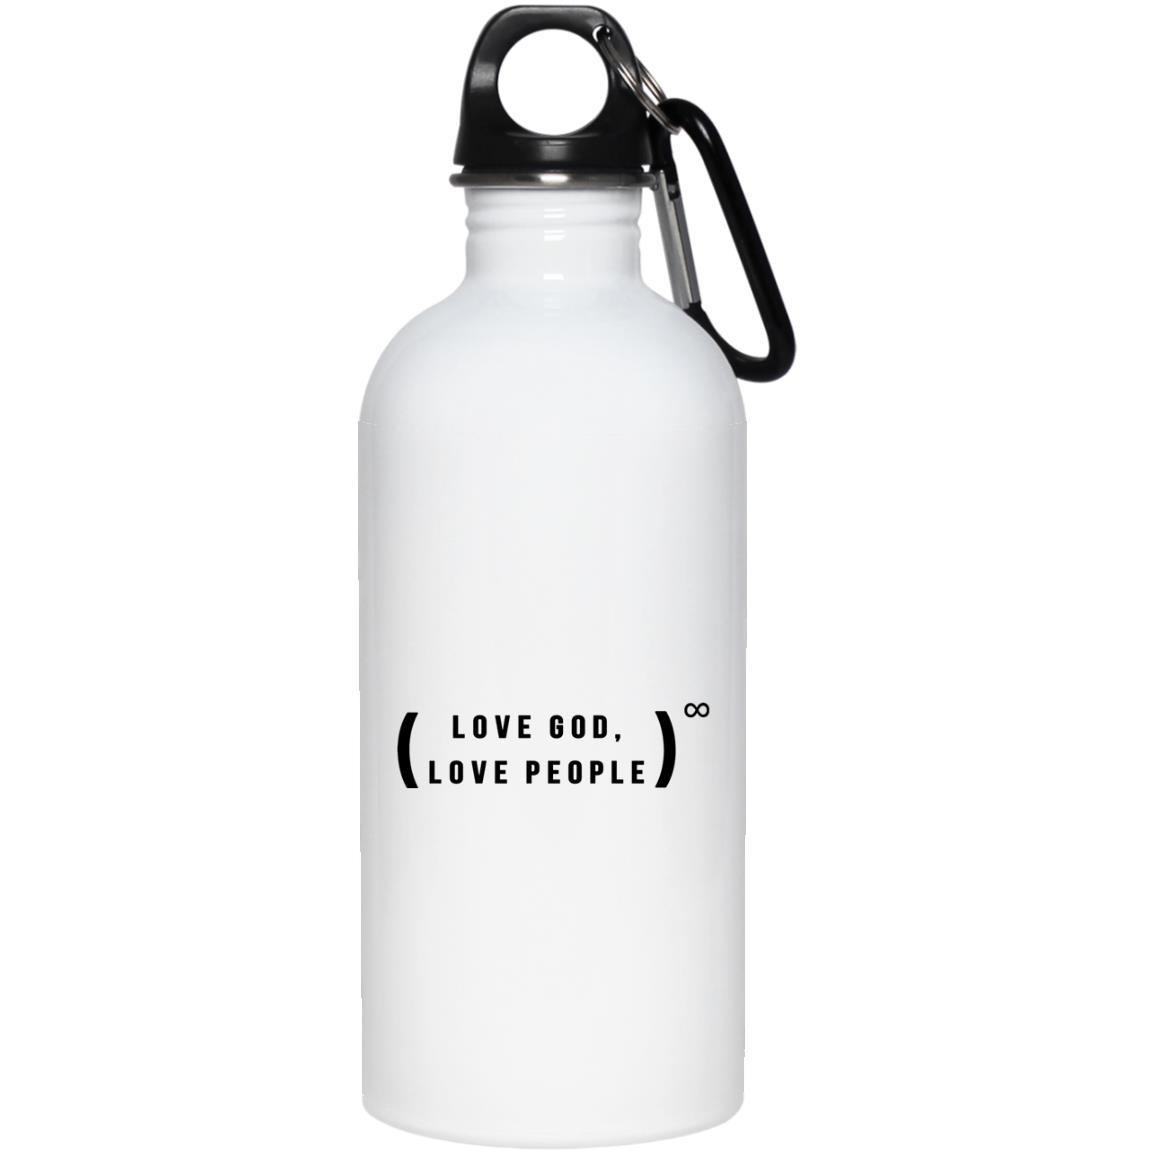 Love God, Love People (20oz Steel Water Bottle) - SDG Clothing